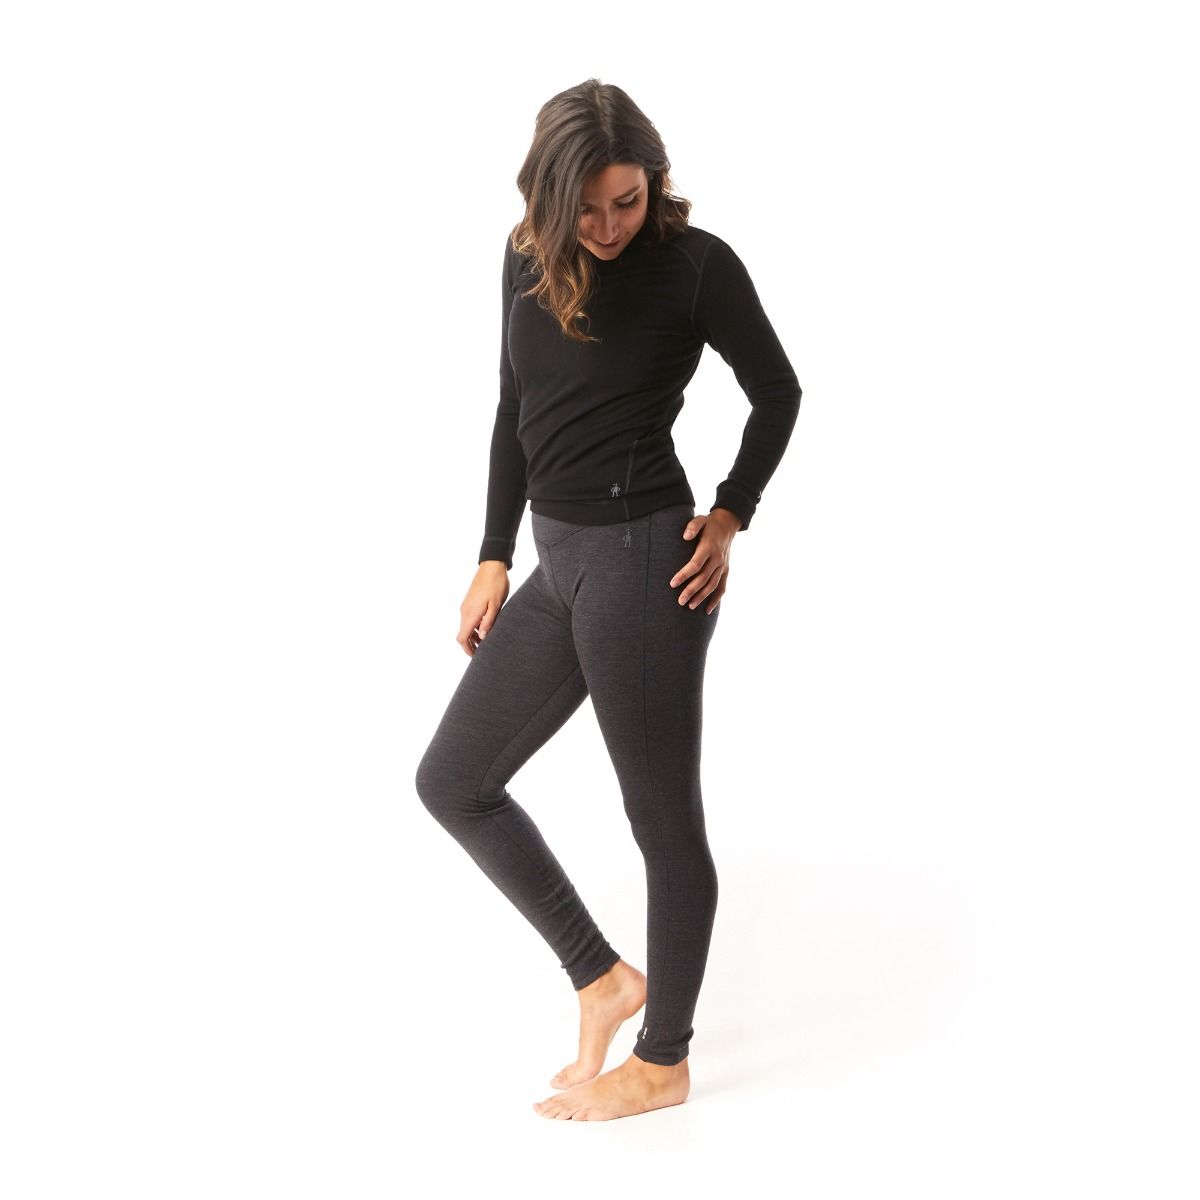 Buy MERINO WOOL Blend Women's Thermal Underwear Base Layer Leggings  Bottoms. Perfect for Winter Layering and Sports. Thermal Underwear. Online  in India 